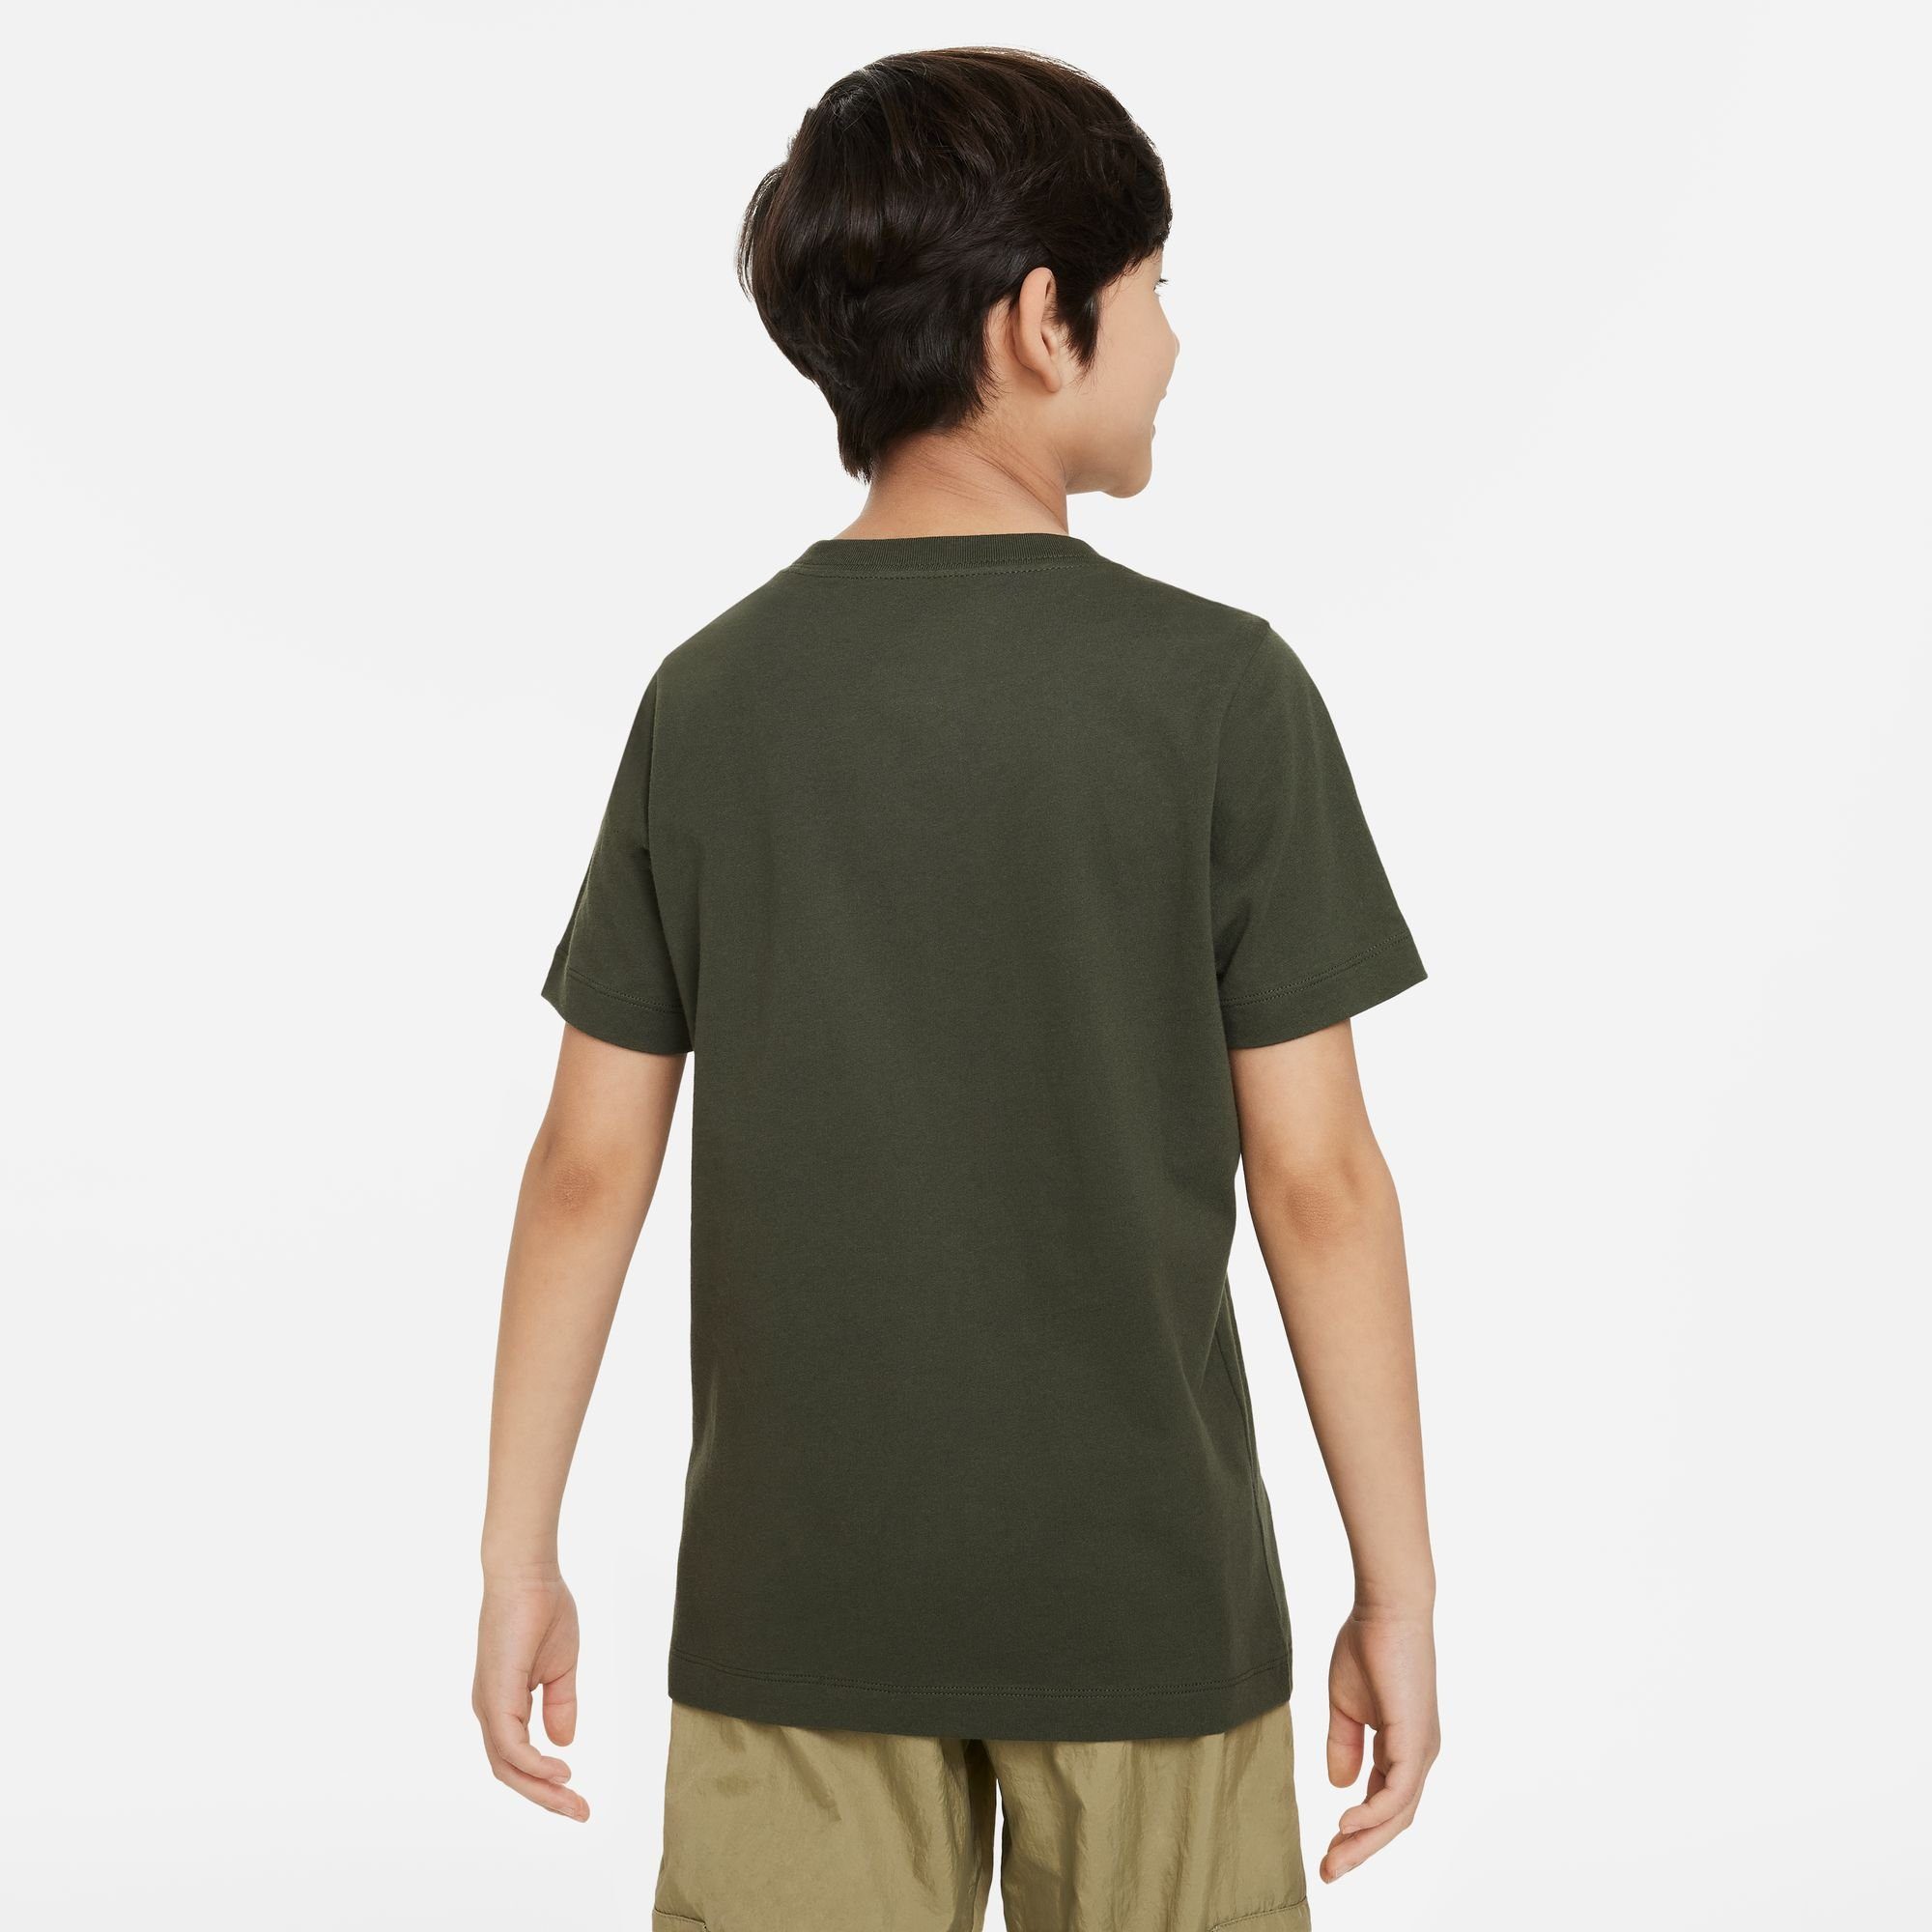 Nike Sportswear T-Shirt BIG T-SHIRT CARGO KHAKI/WHITE KIDS'